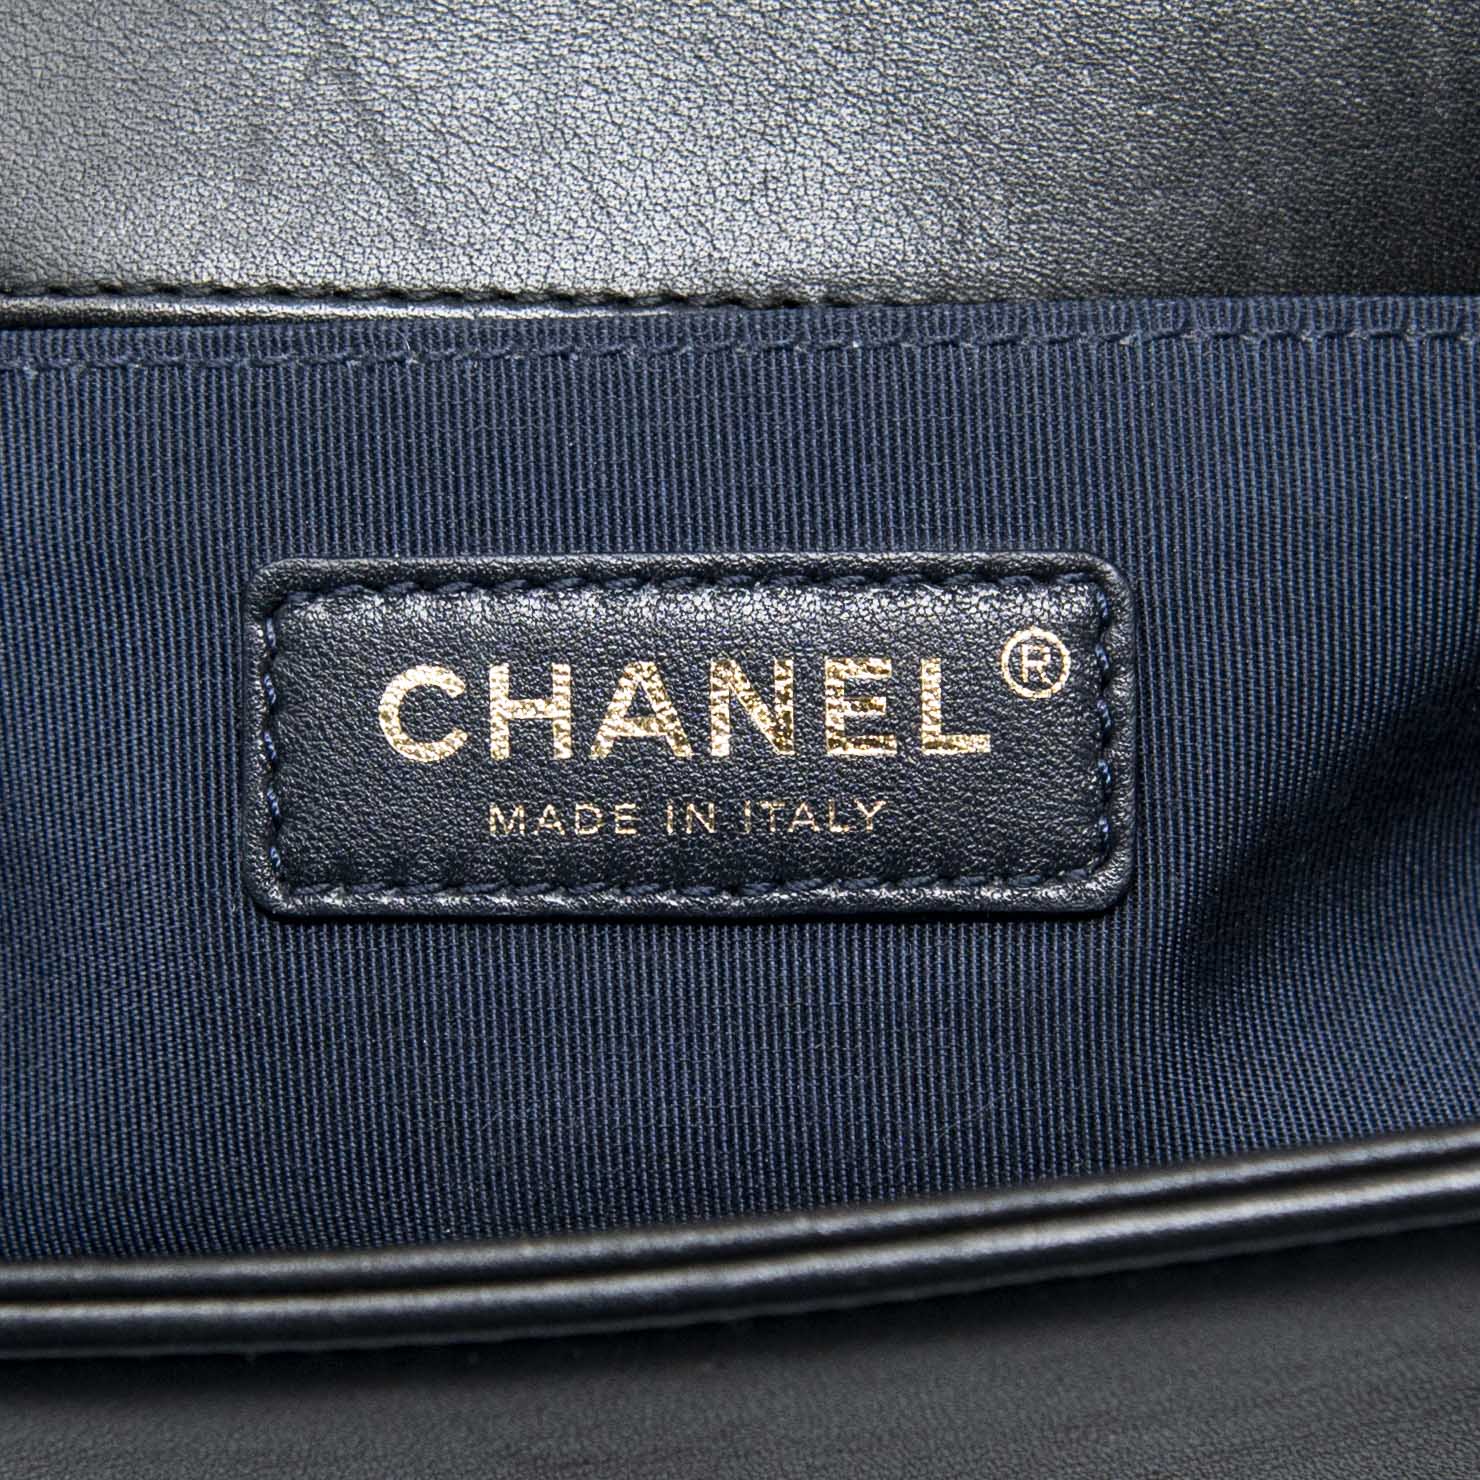 Chanel Black Small Boy Bag